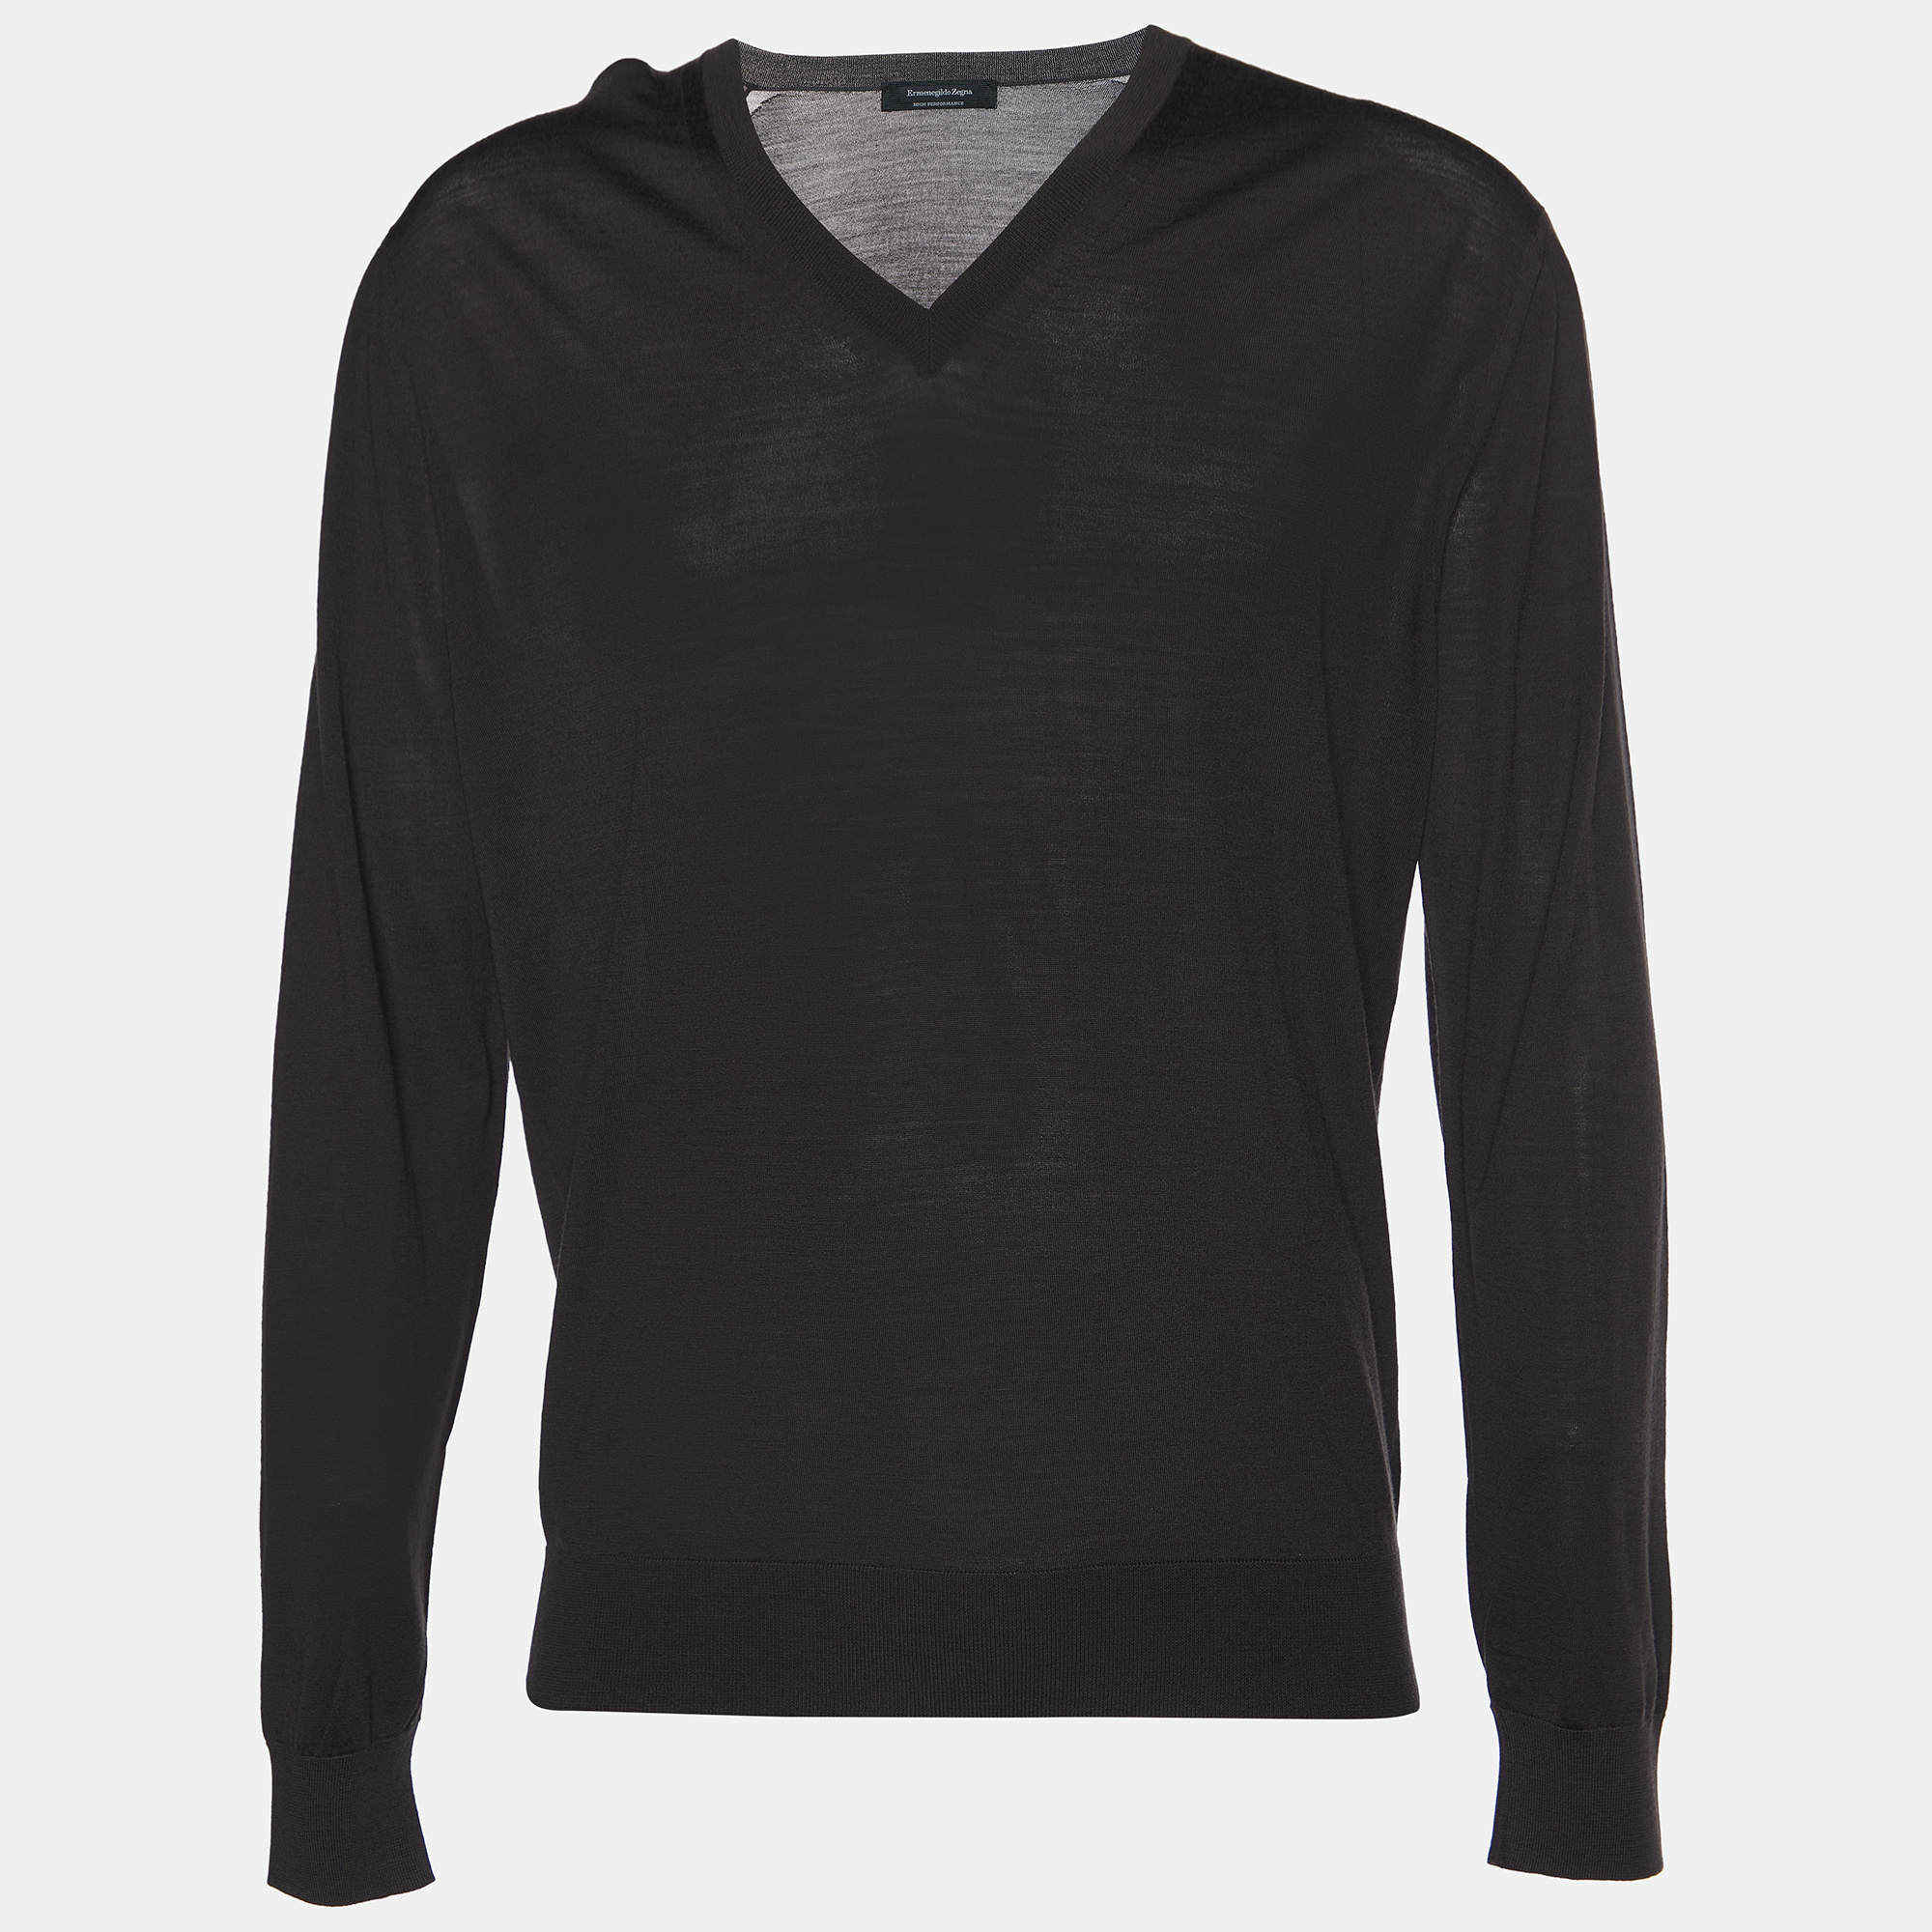 Ermenegildo zegna dark brown wool knit v-neck t-shirt xl